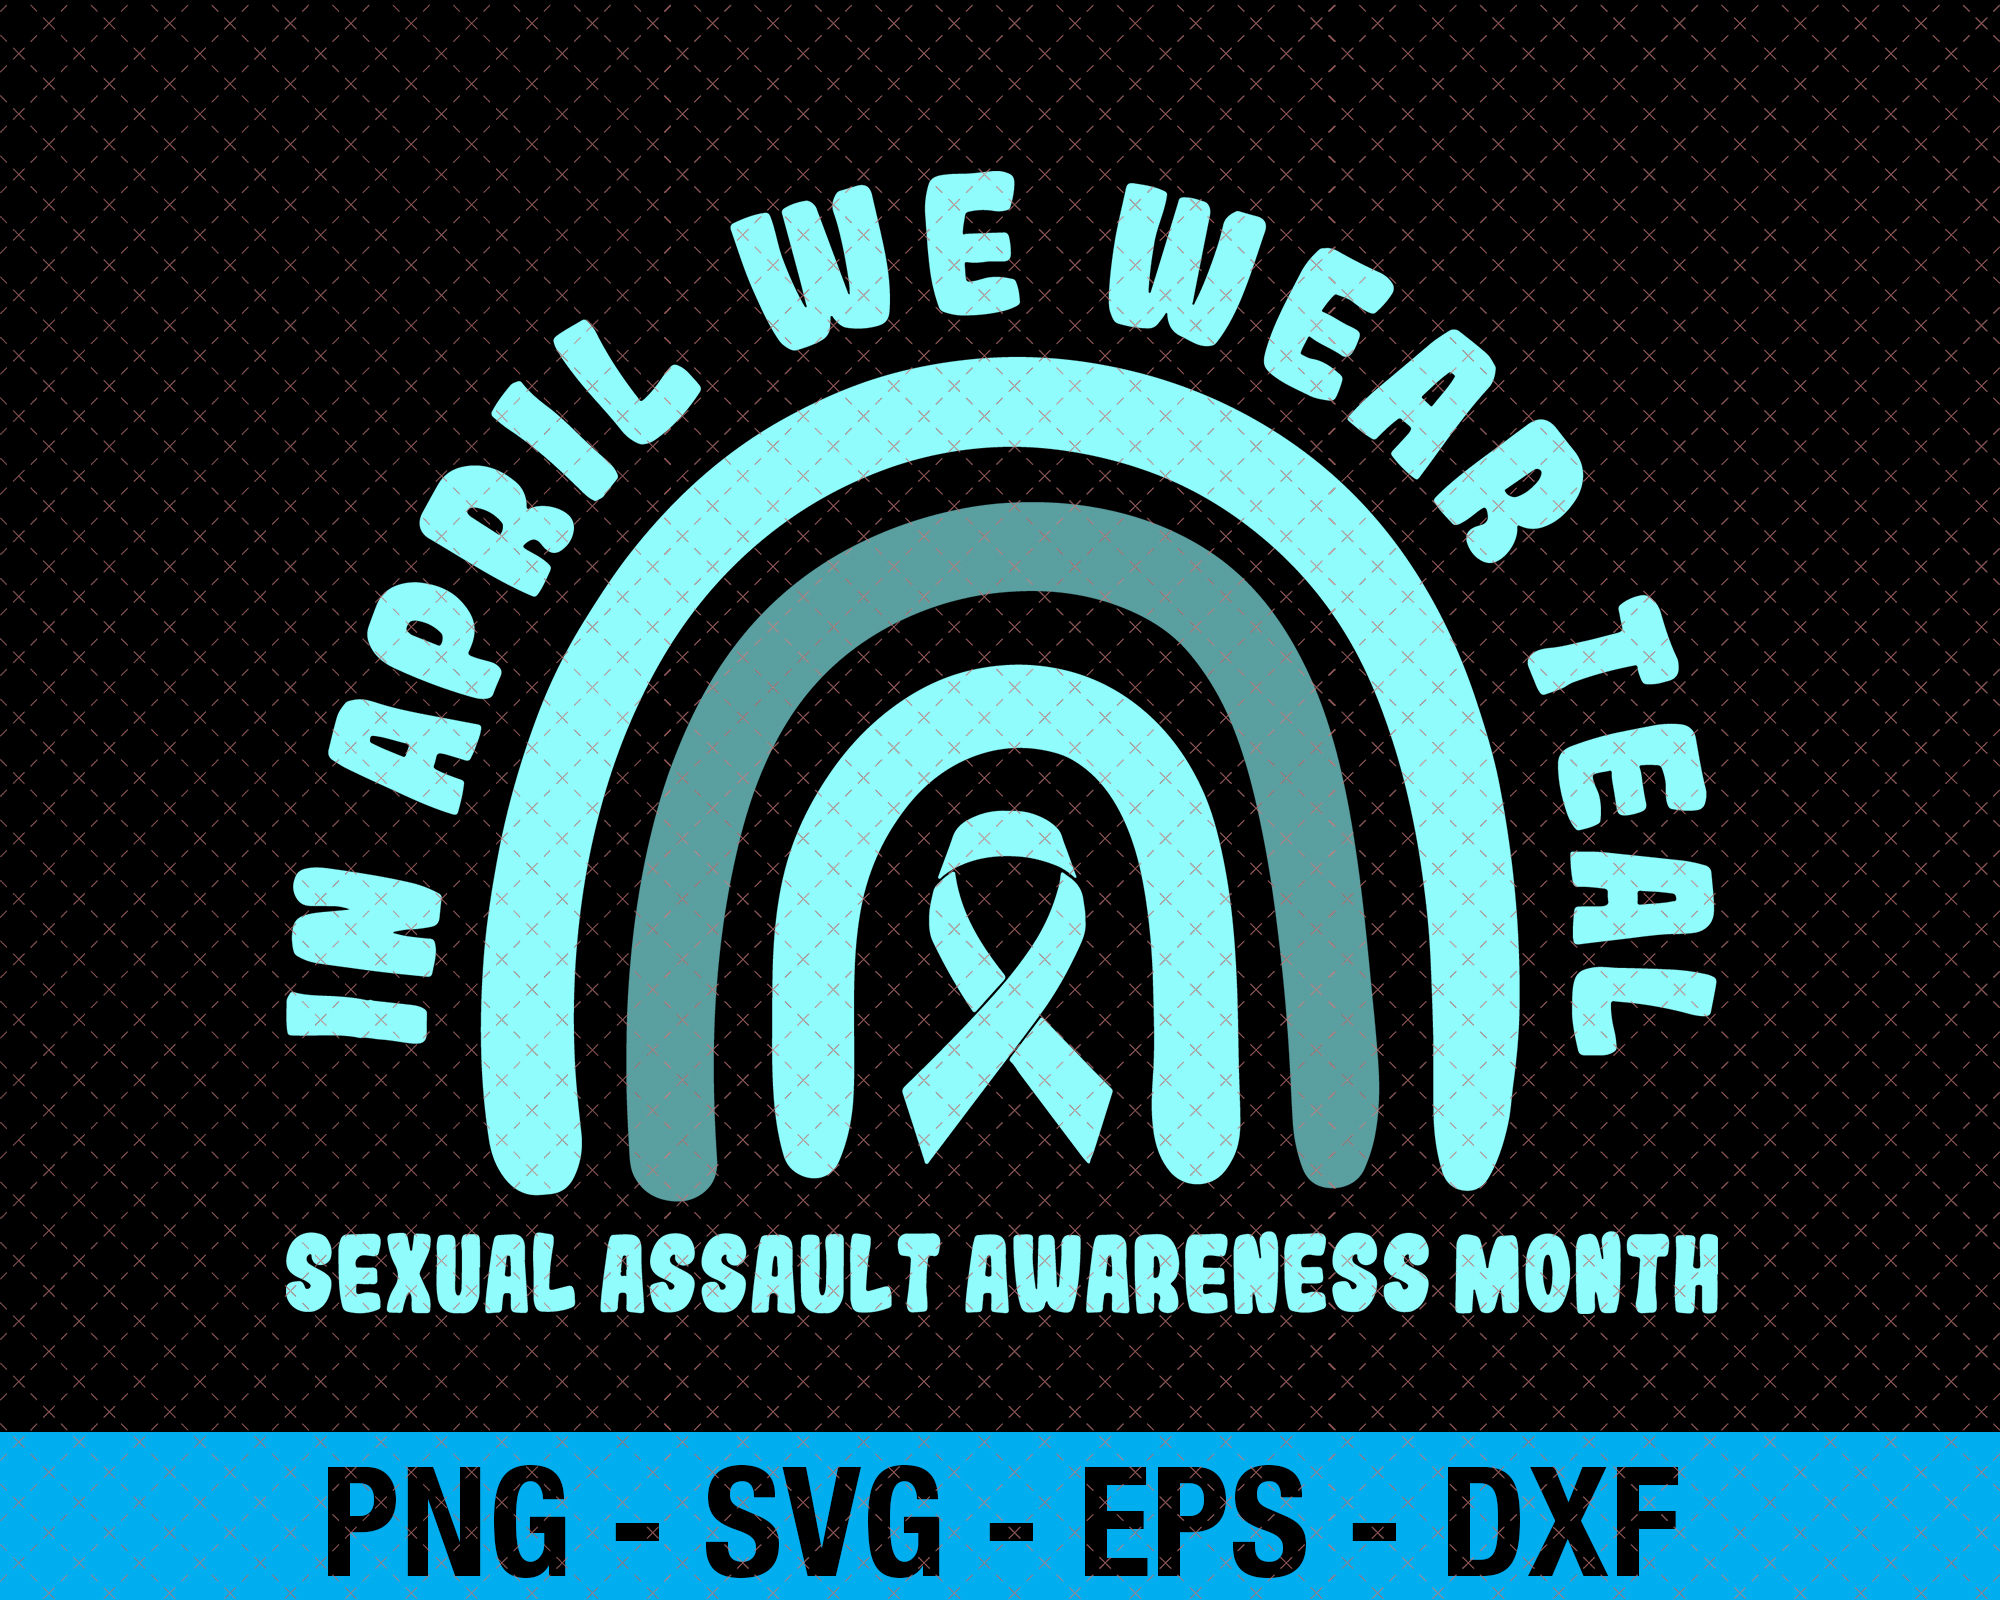 In April We Wear Teal Sexual Assault Awareness Month